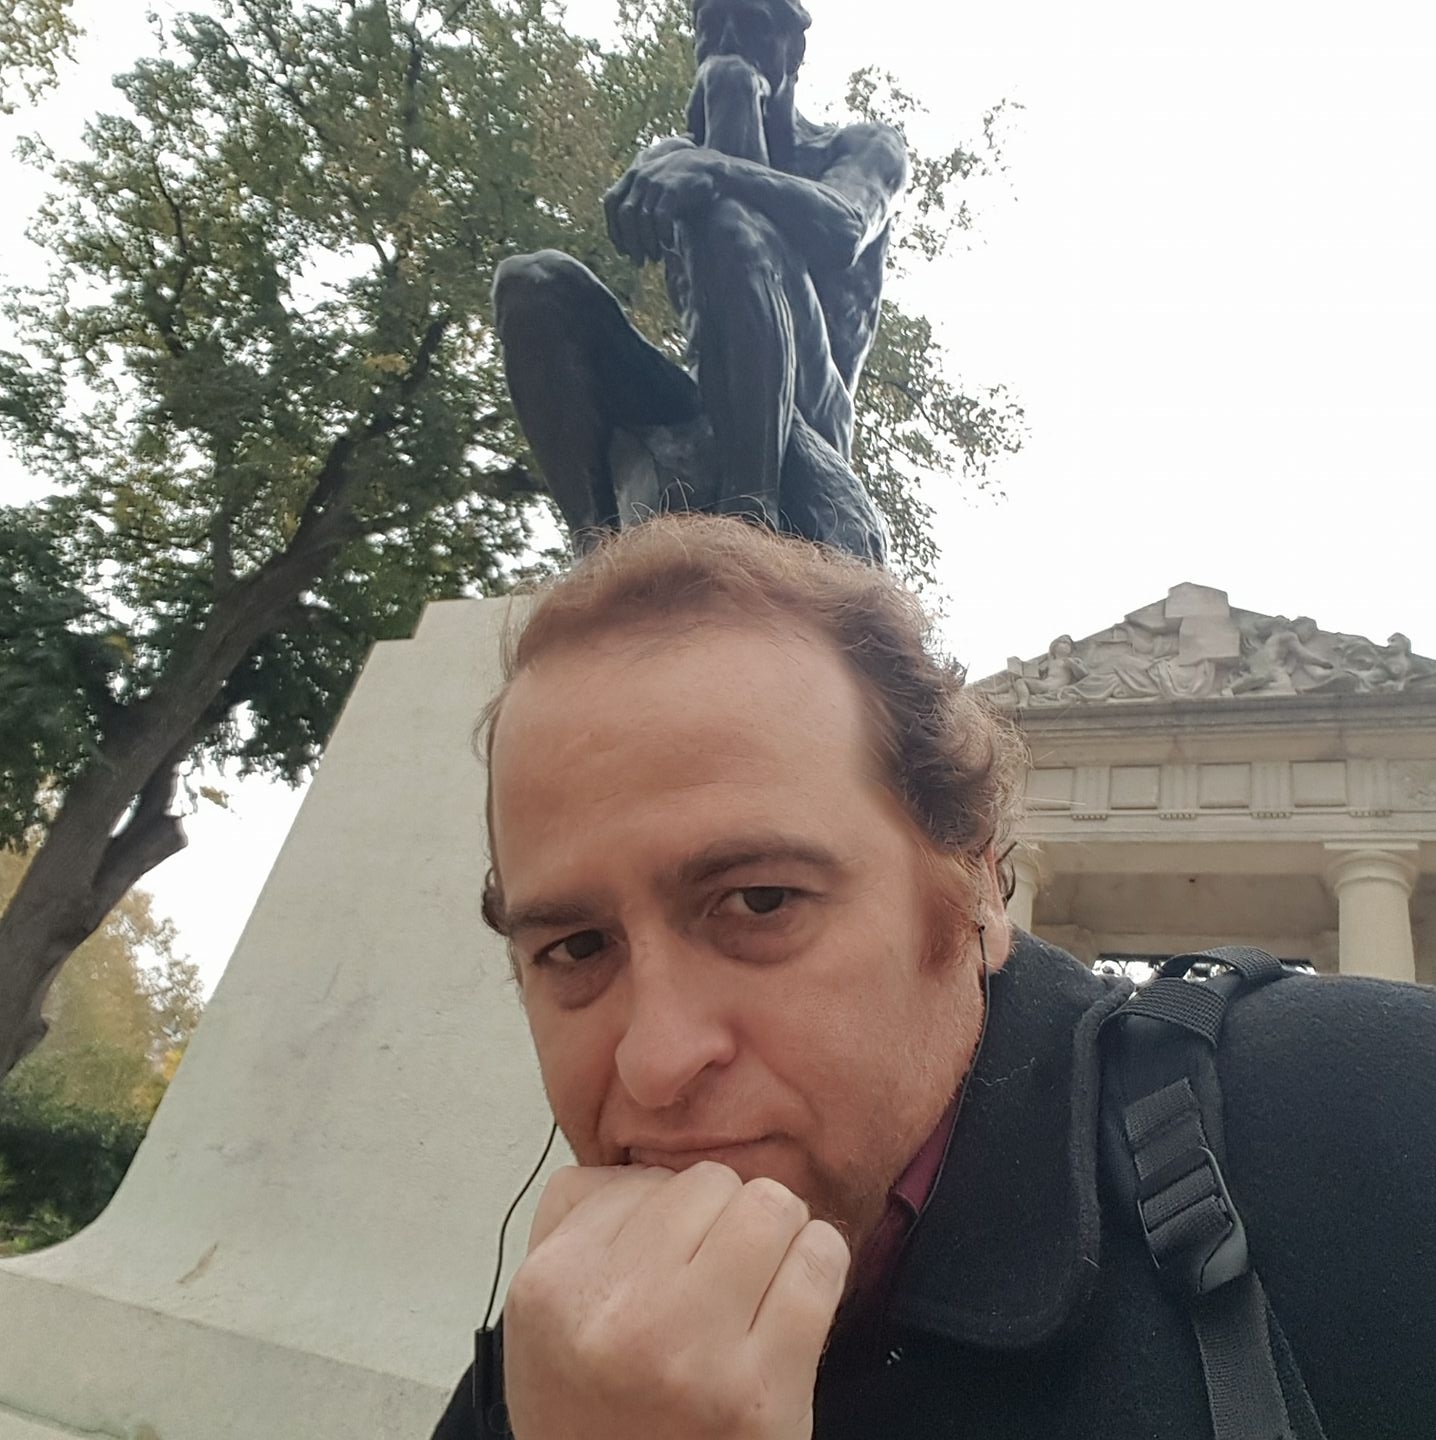 Philly Rodin